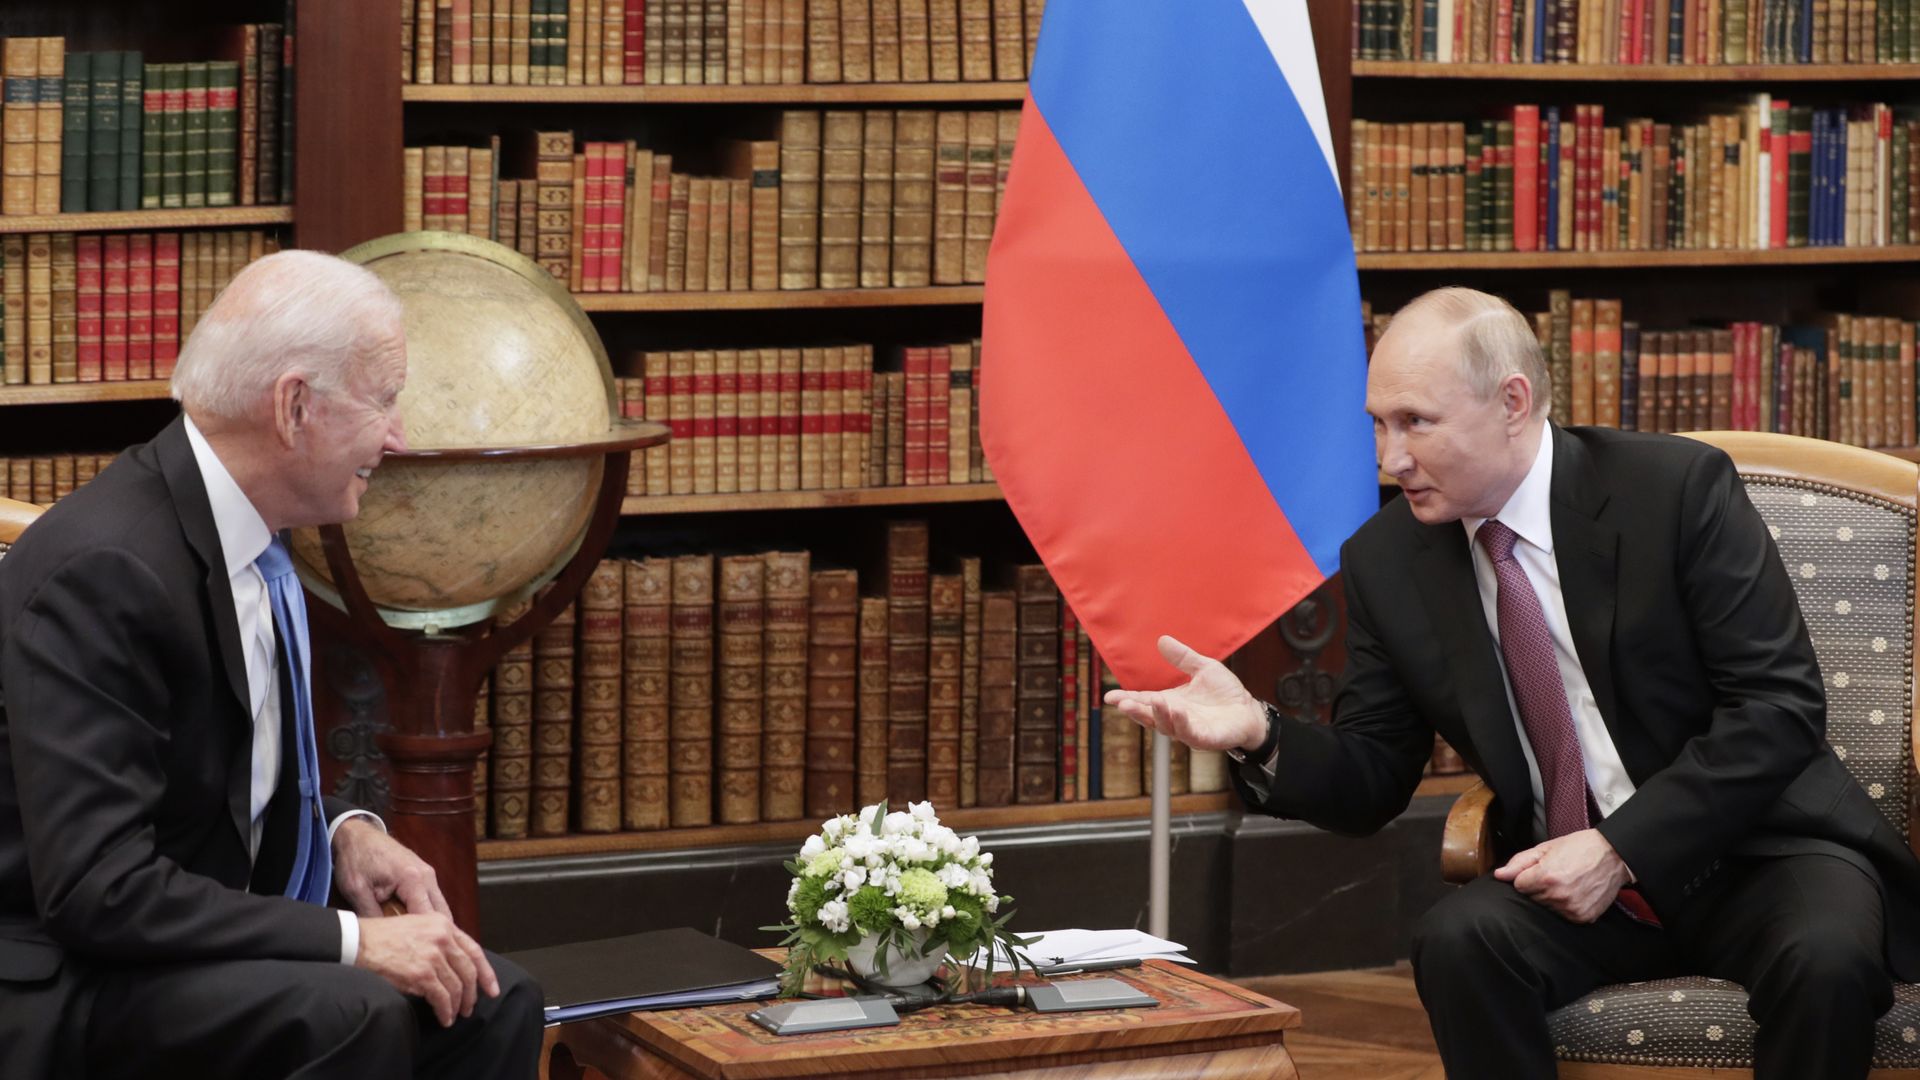 Biden and Putin meeting